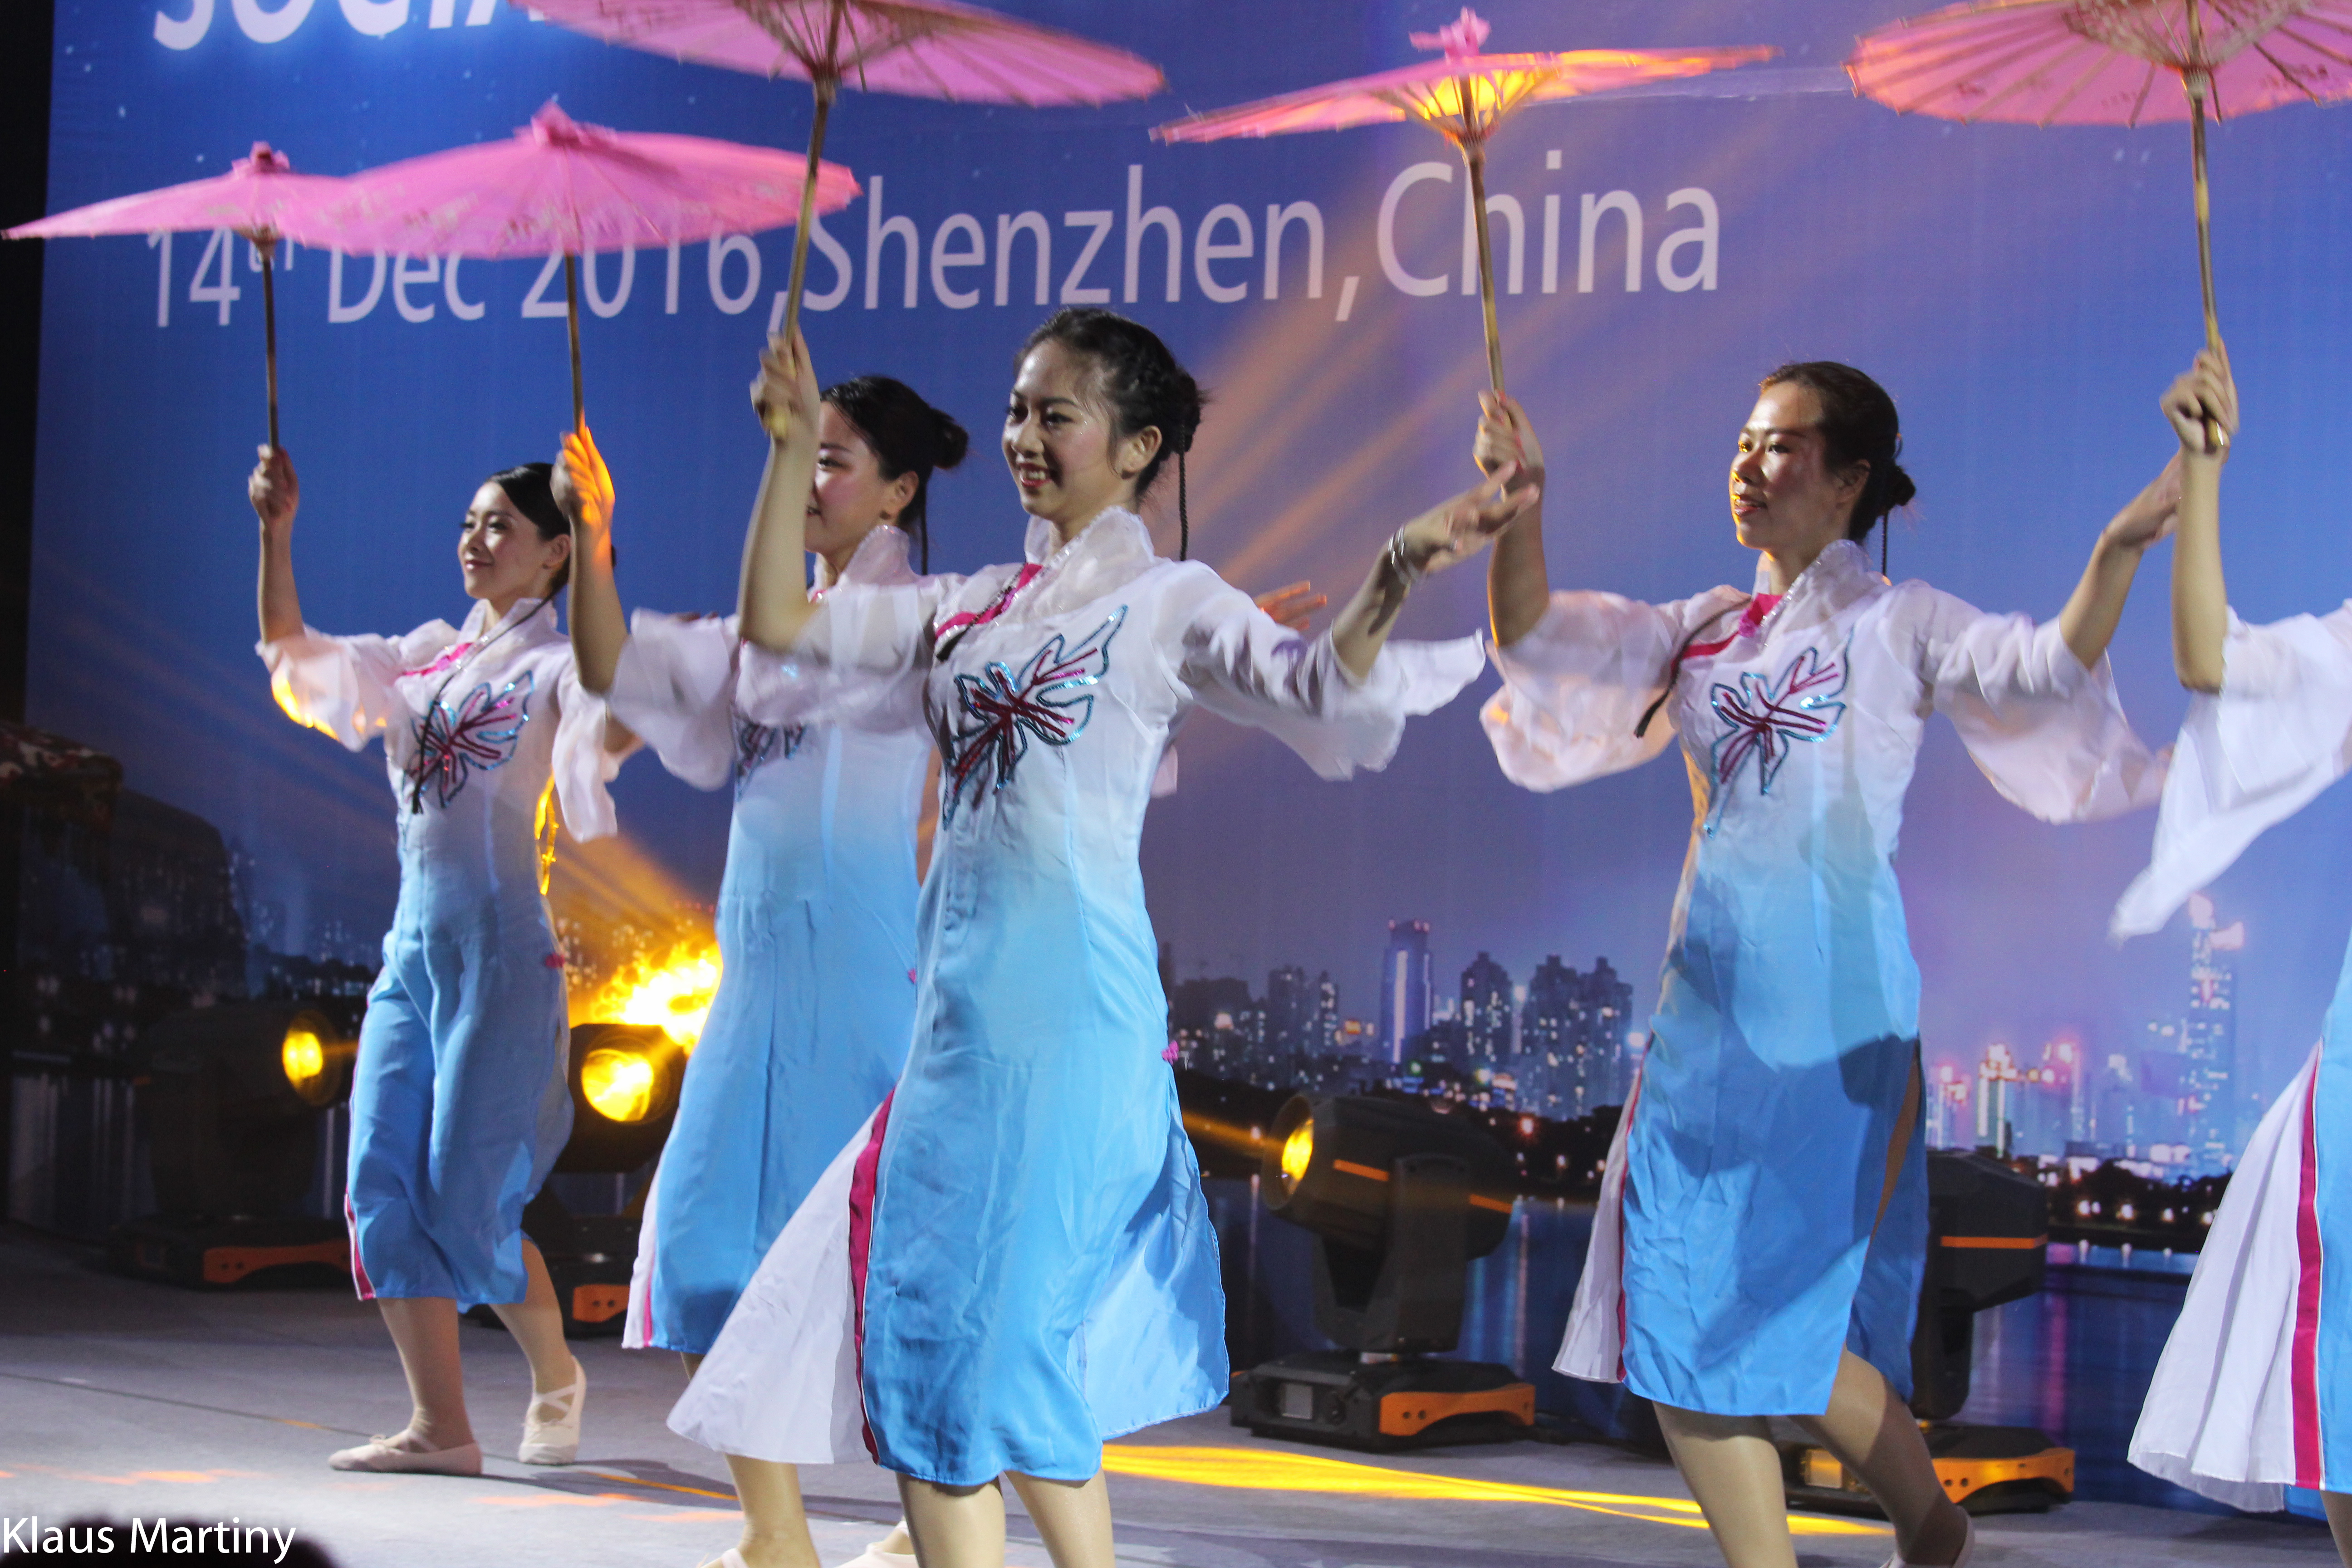 14 Dec 2016, Shenzen, China, ladies dancing